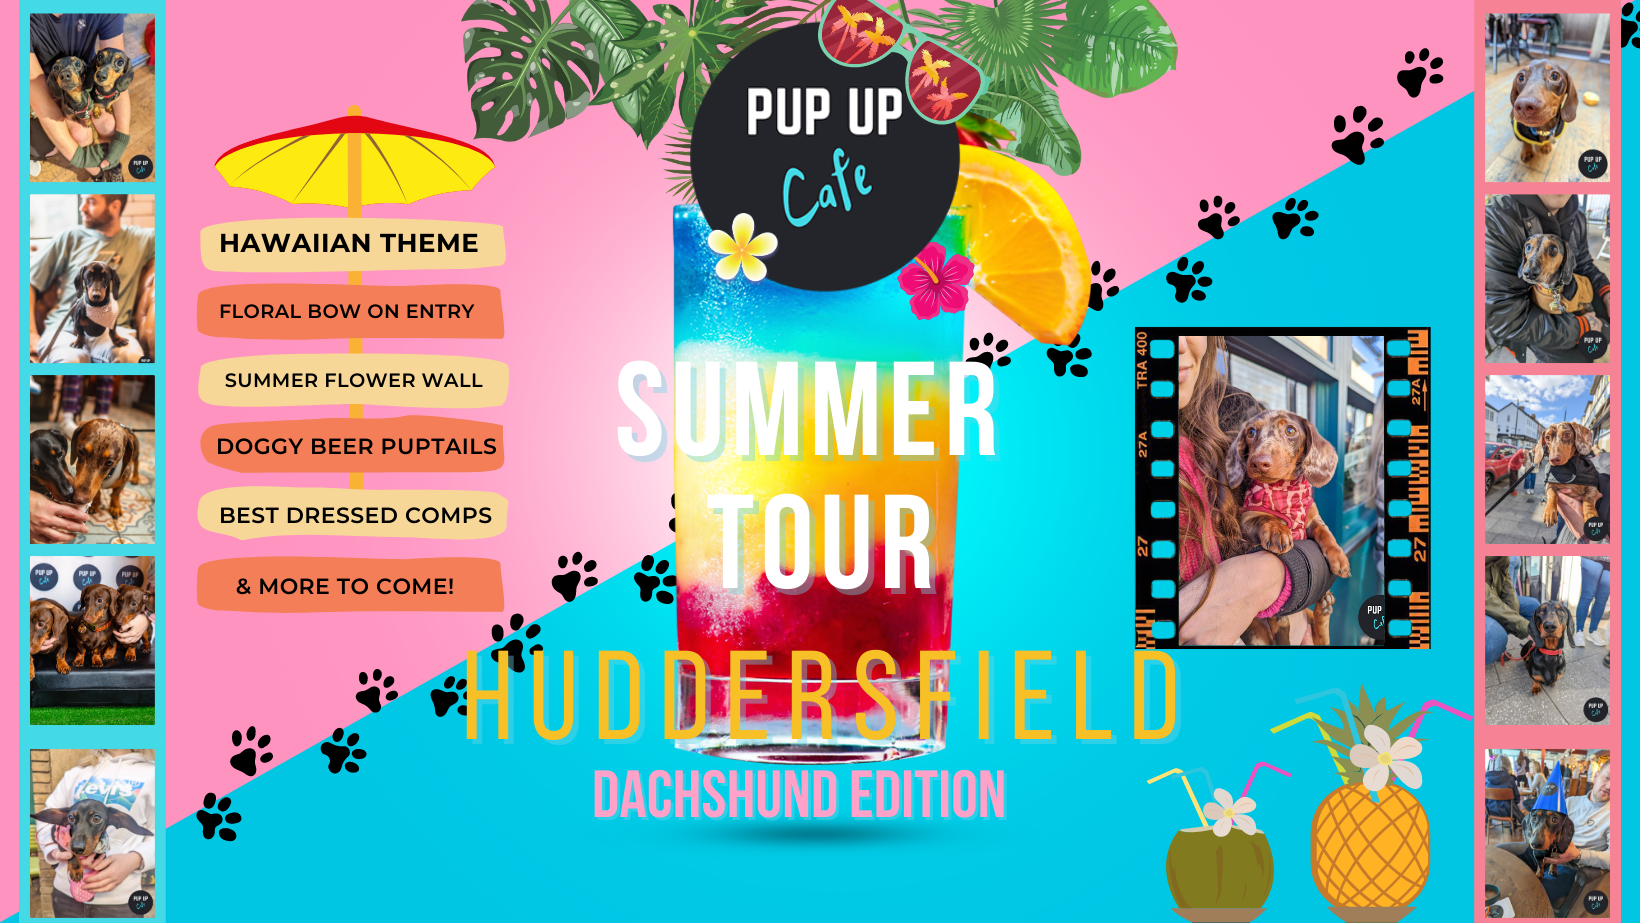 Dachshund Pup Up Cafe – Huddersfield | SUMMER TOUR! 🌞